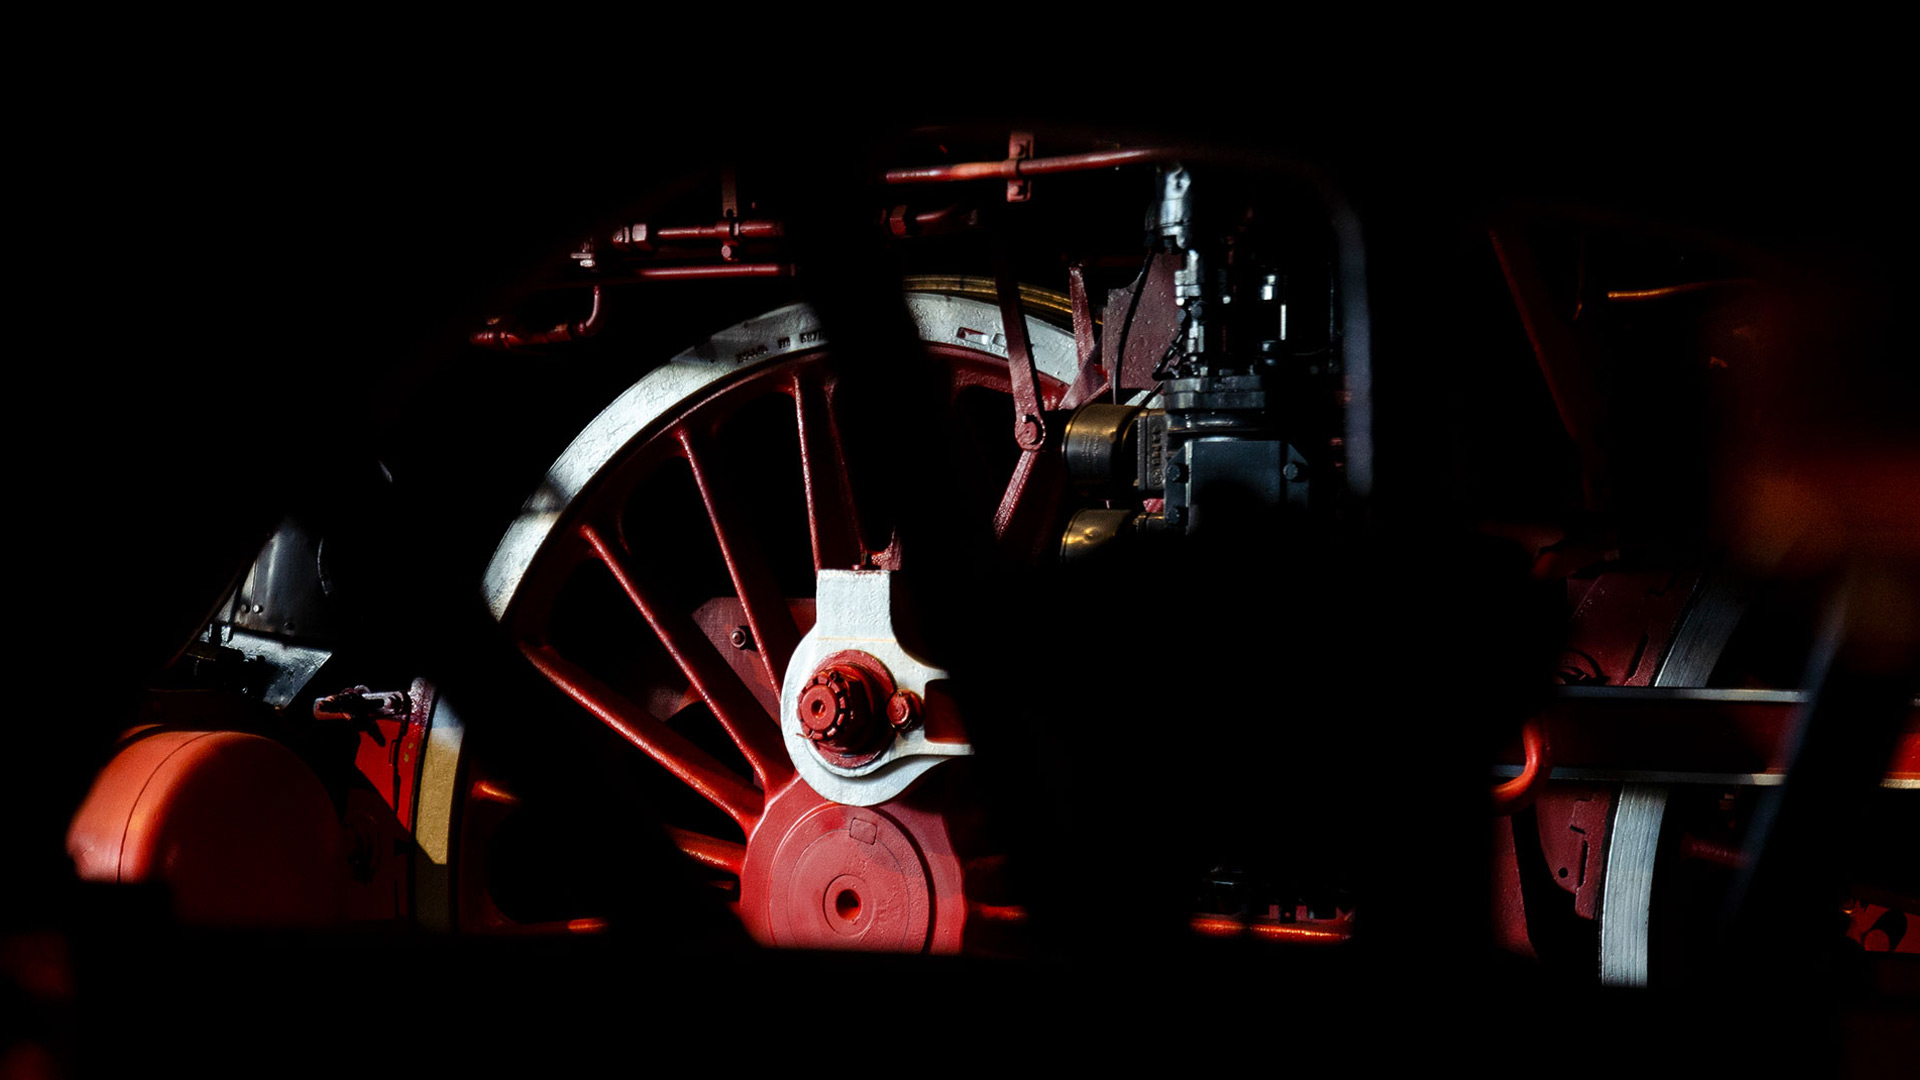 The wheel of a steam locomotive